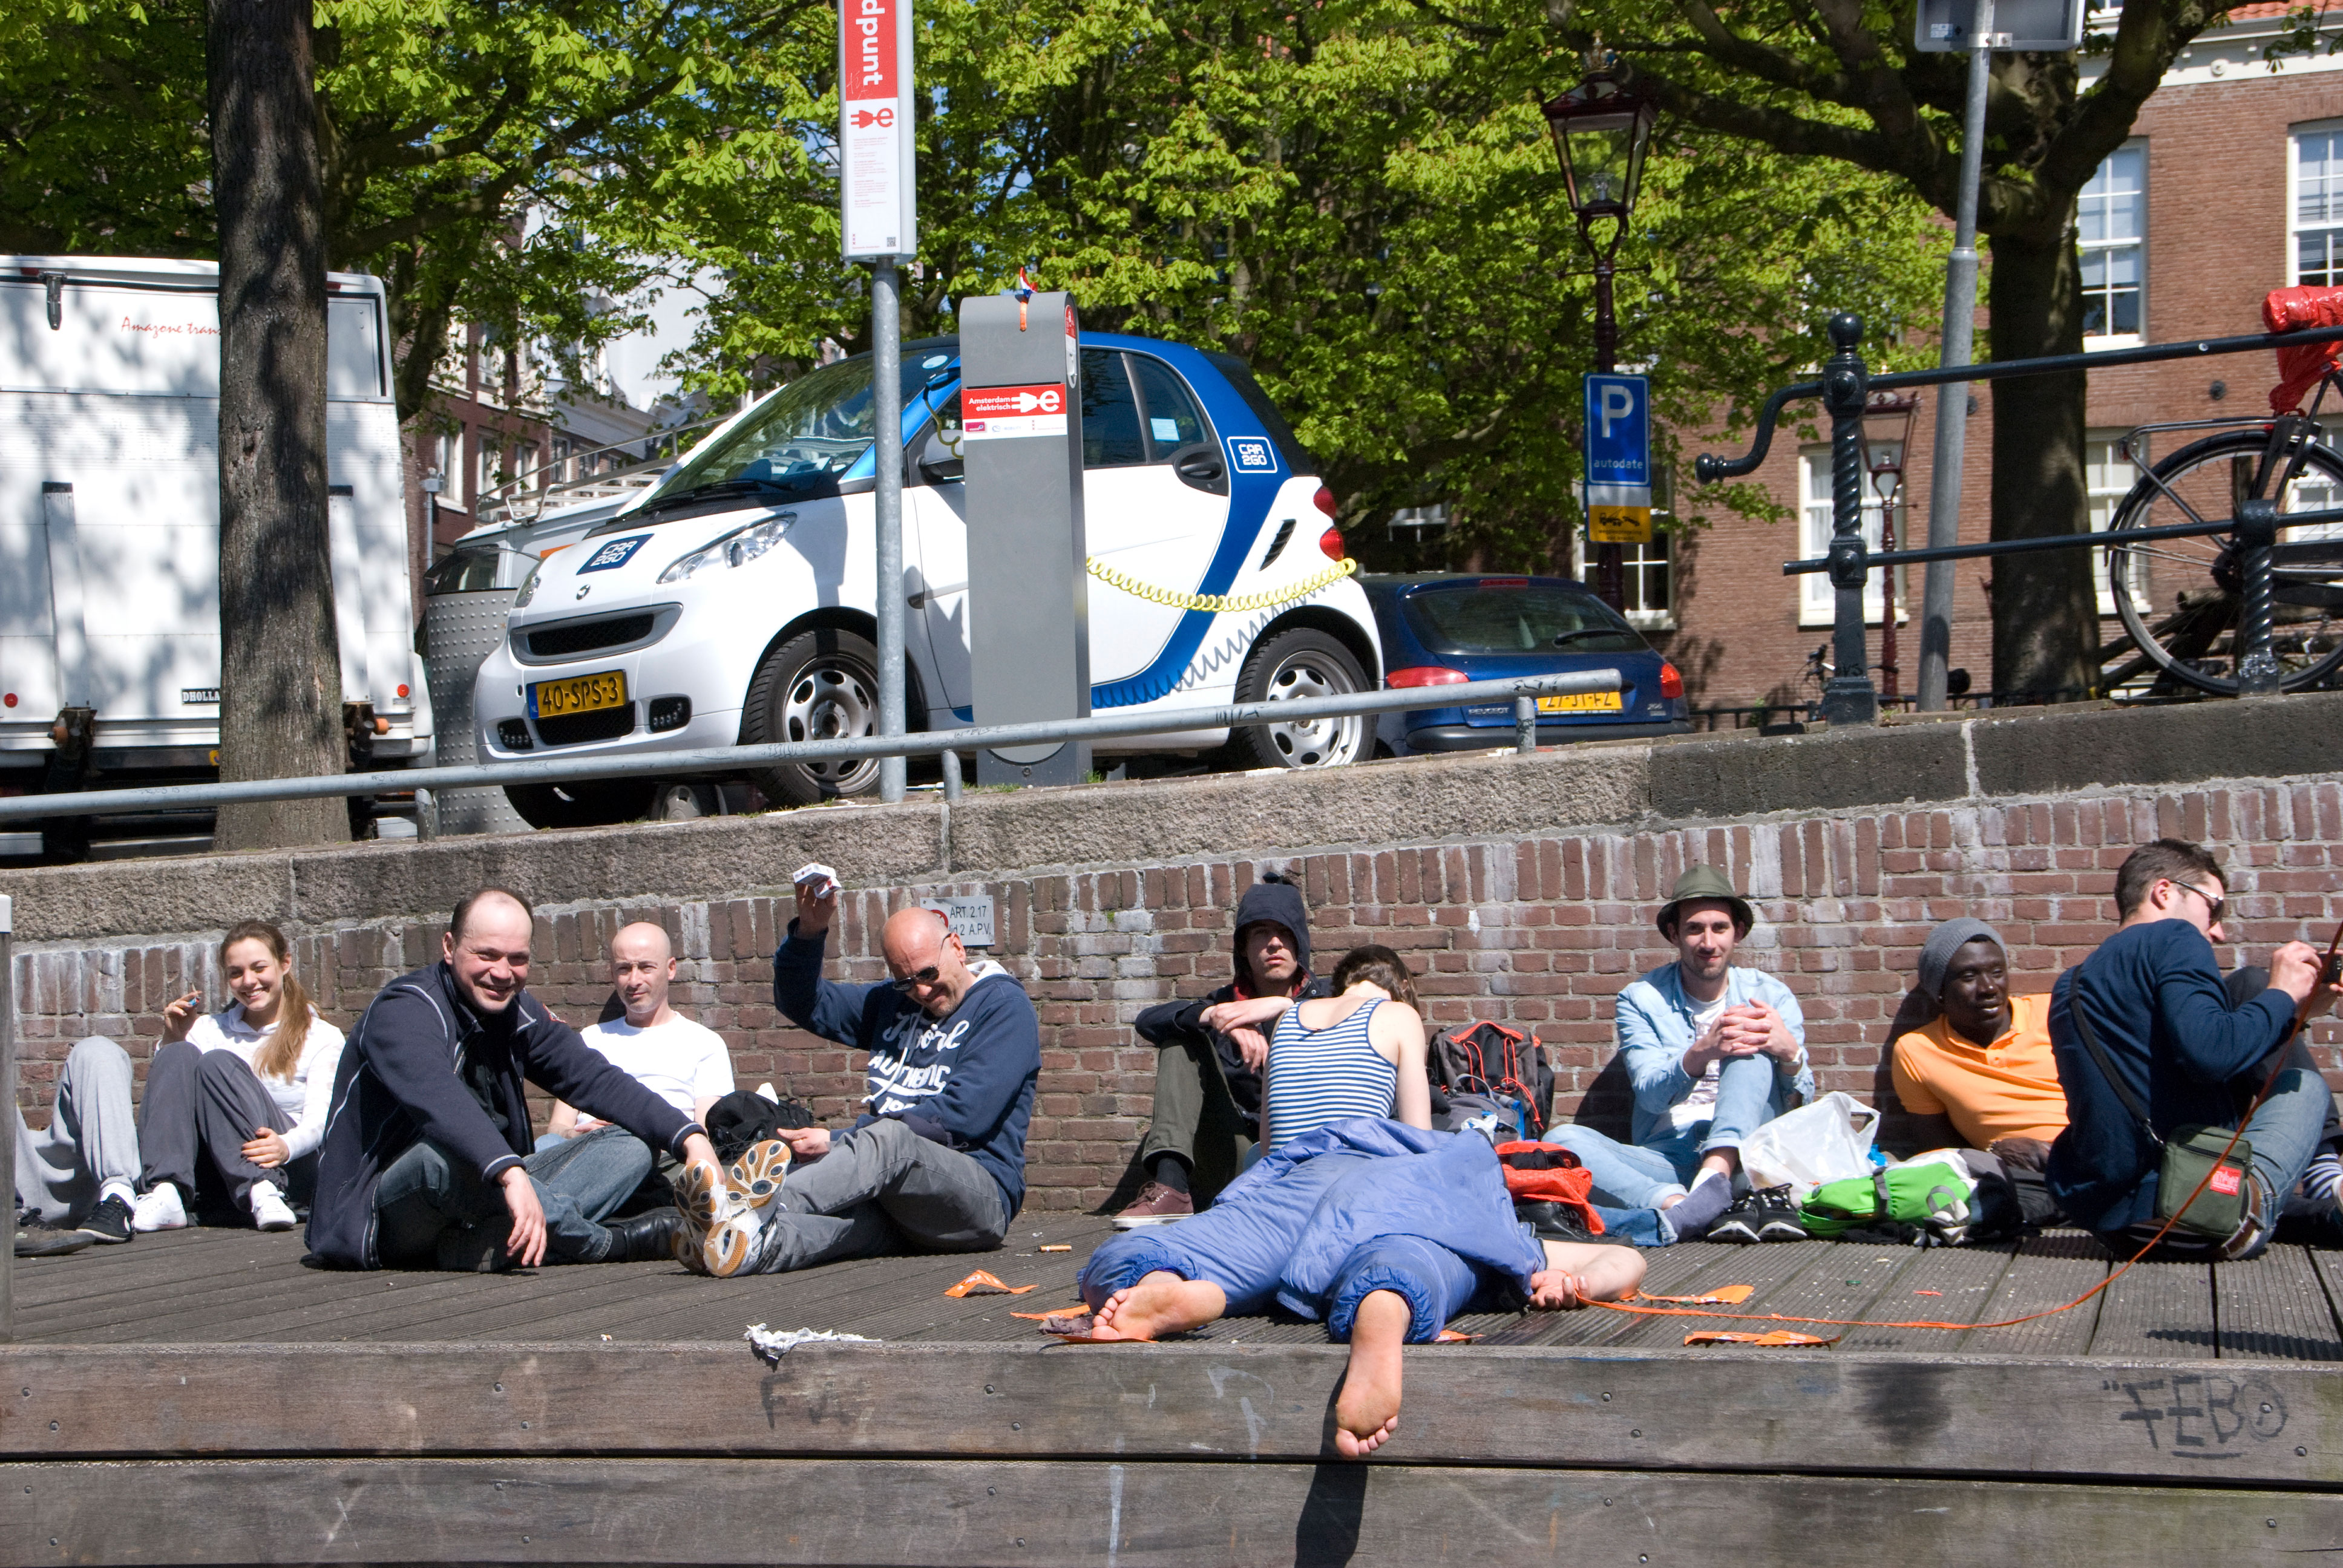 Картинка из Амстердама. Людям хорошо. 2013